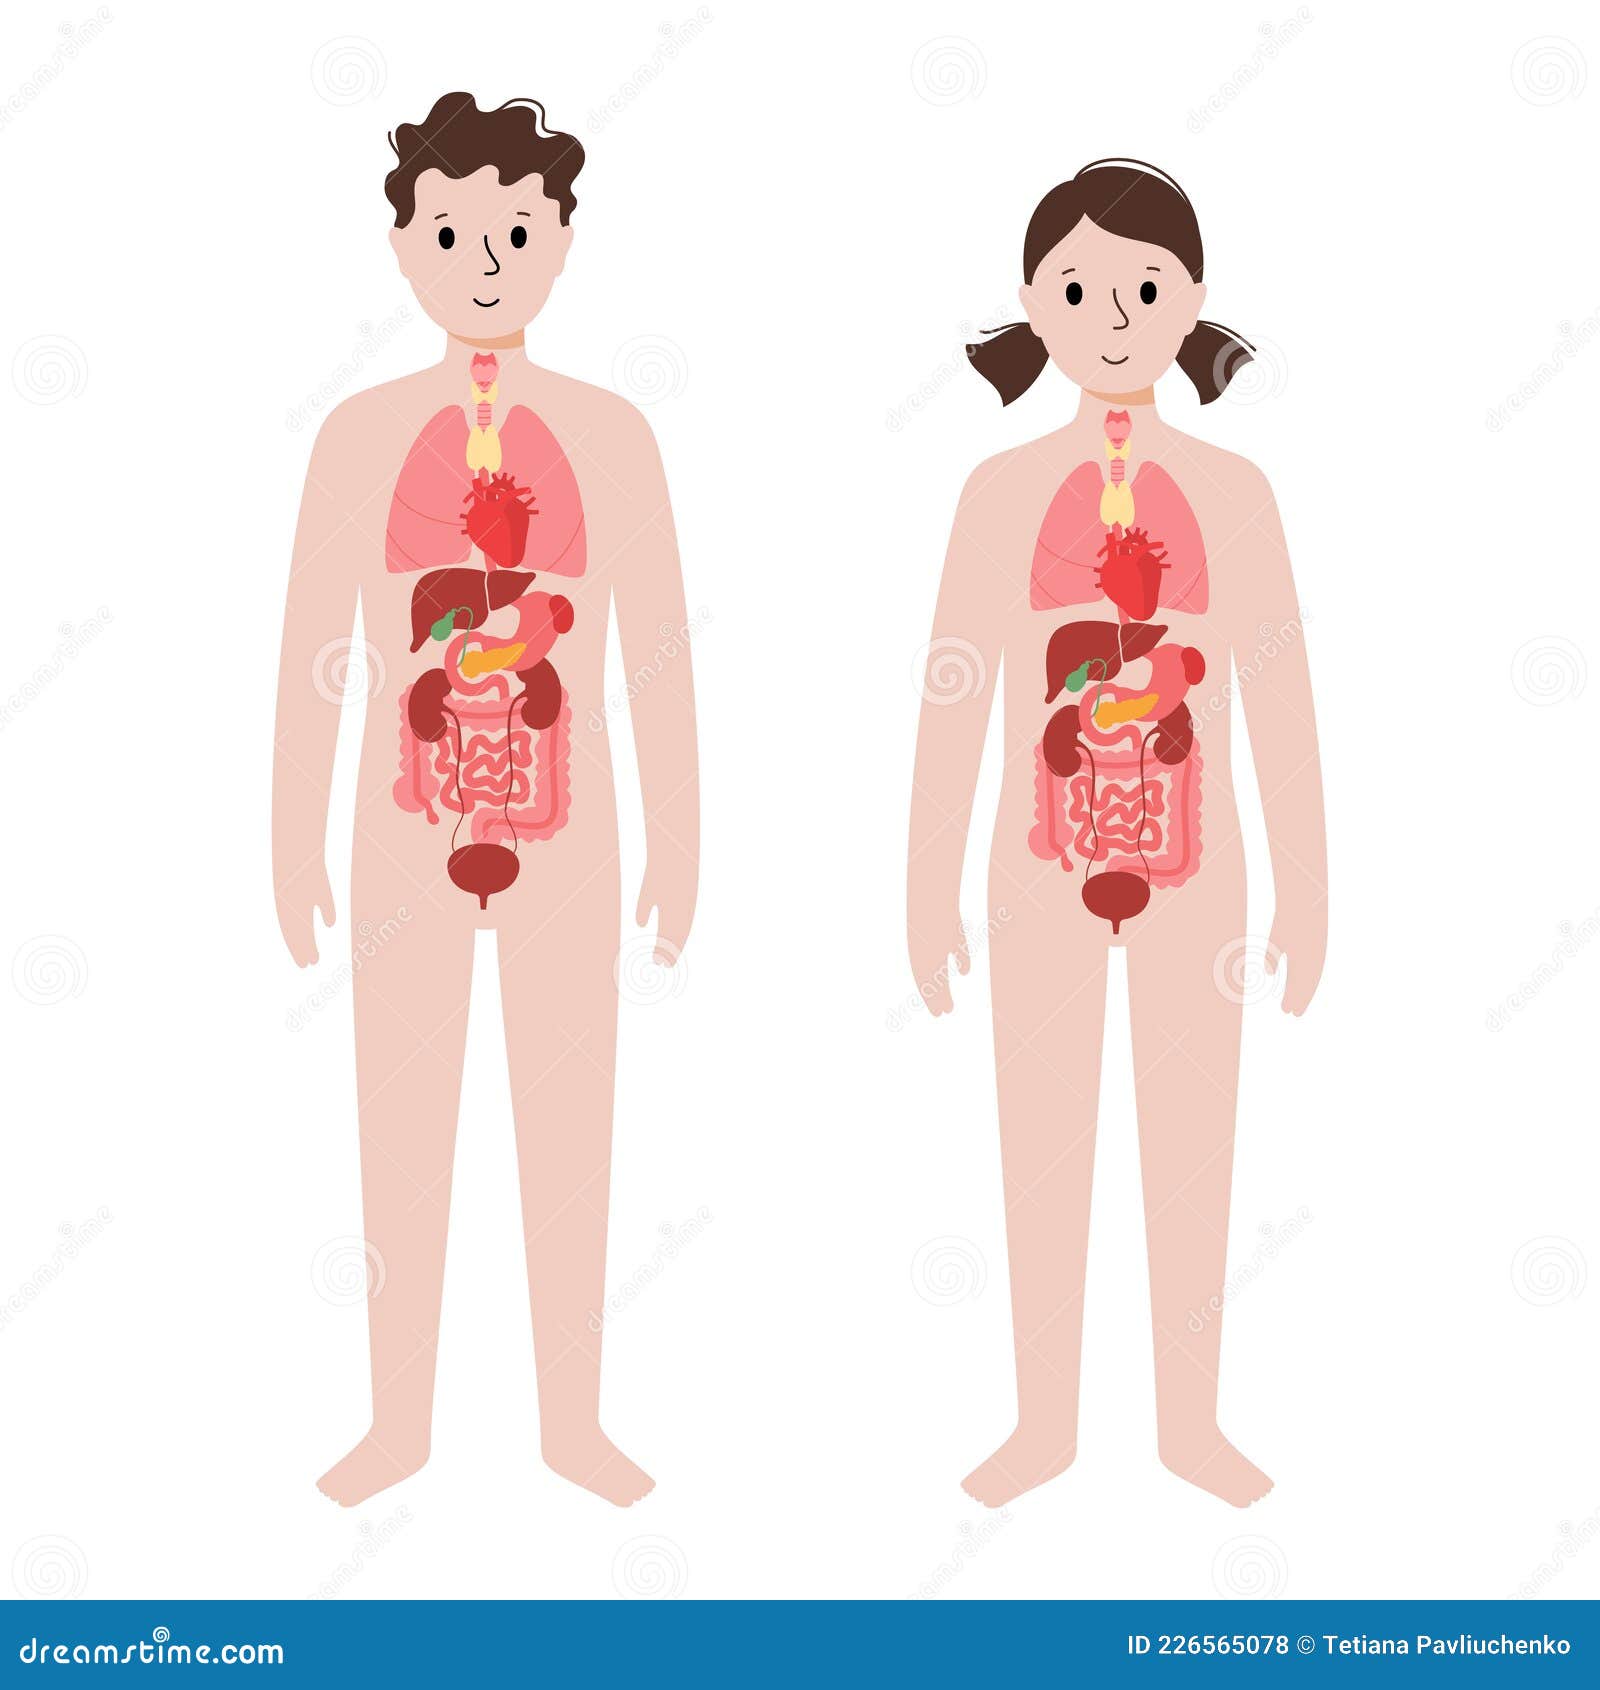 School KwikMedia Educational Illustration of Human Anatomy Systems of Organs for Kids Cartoon Seamless Pattern Education 12 x 18 